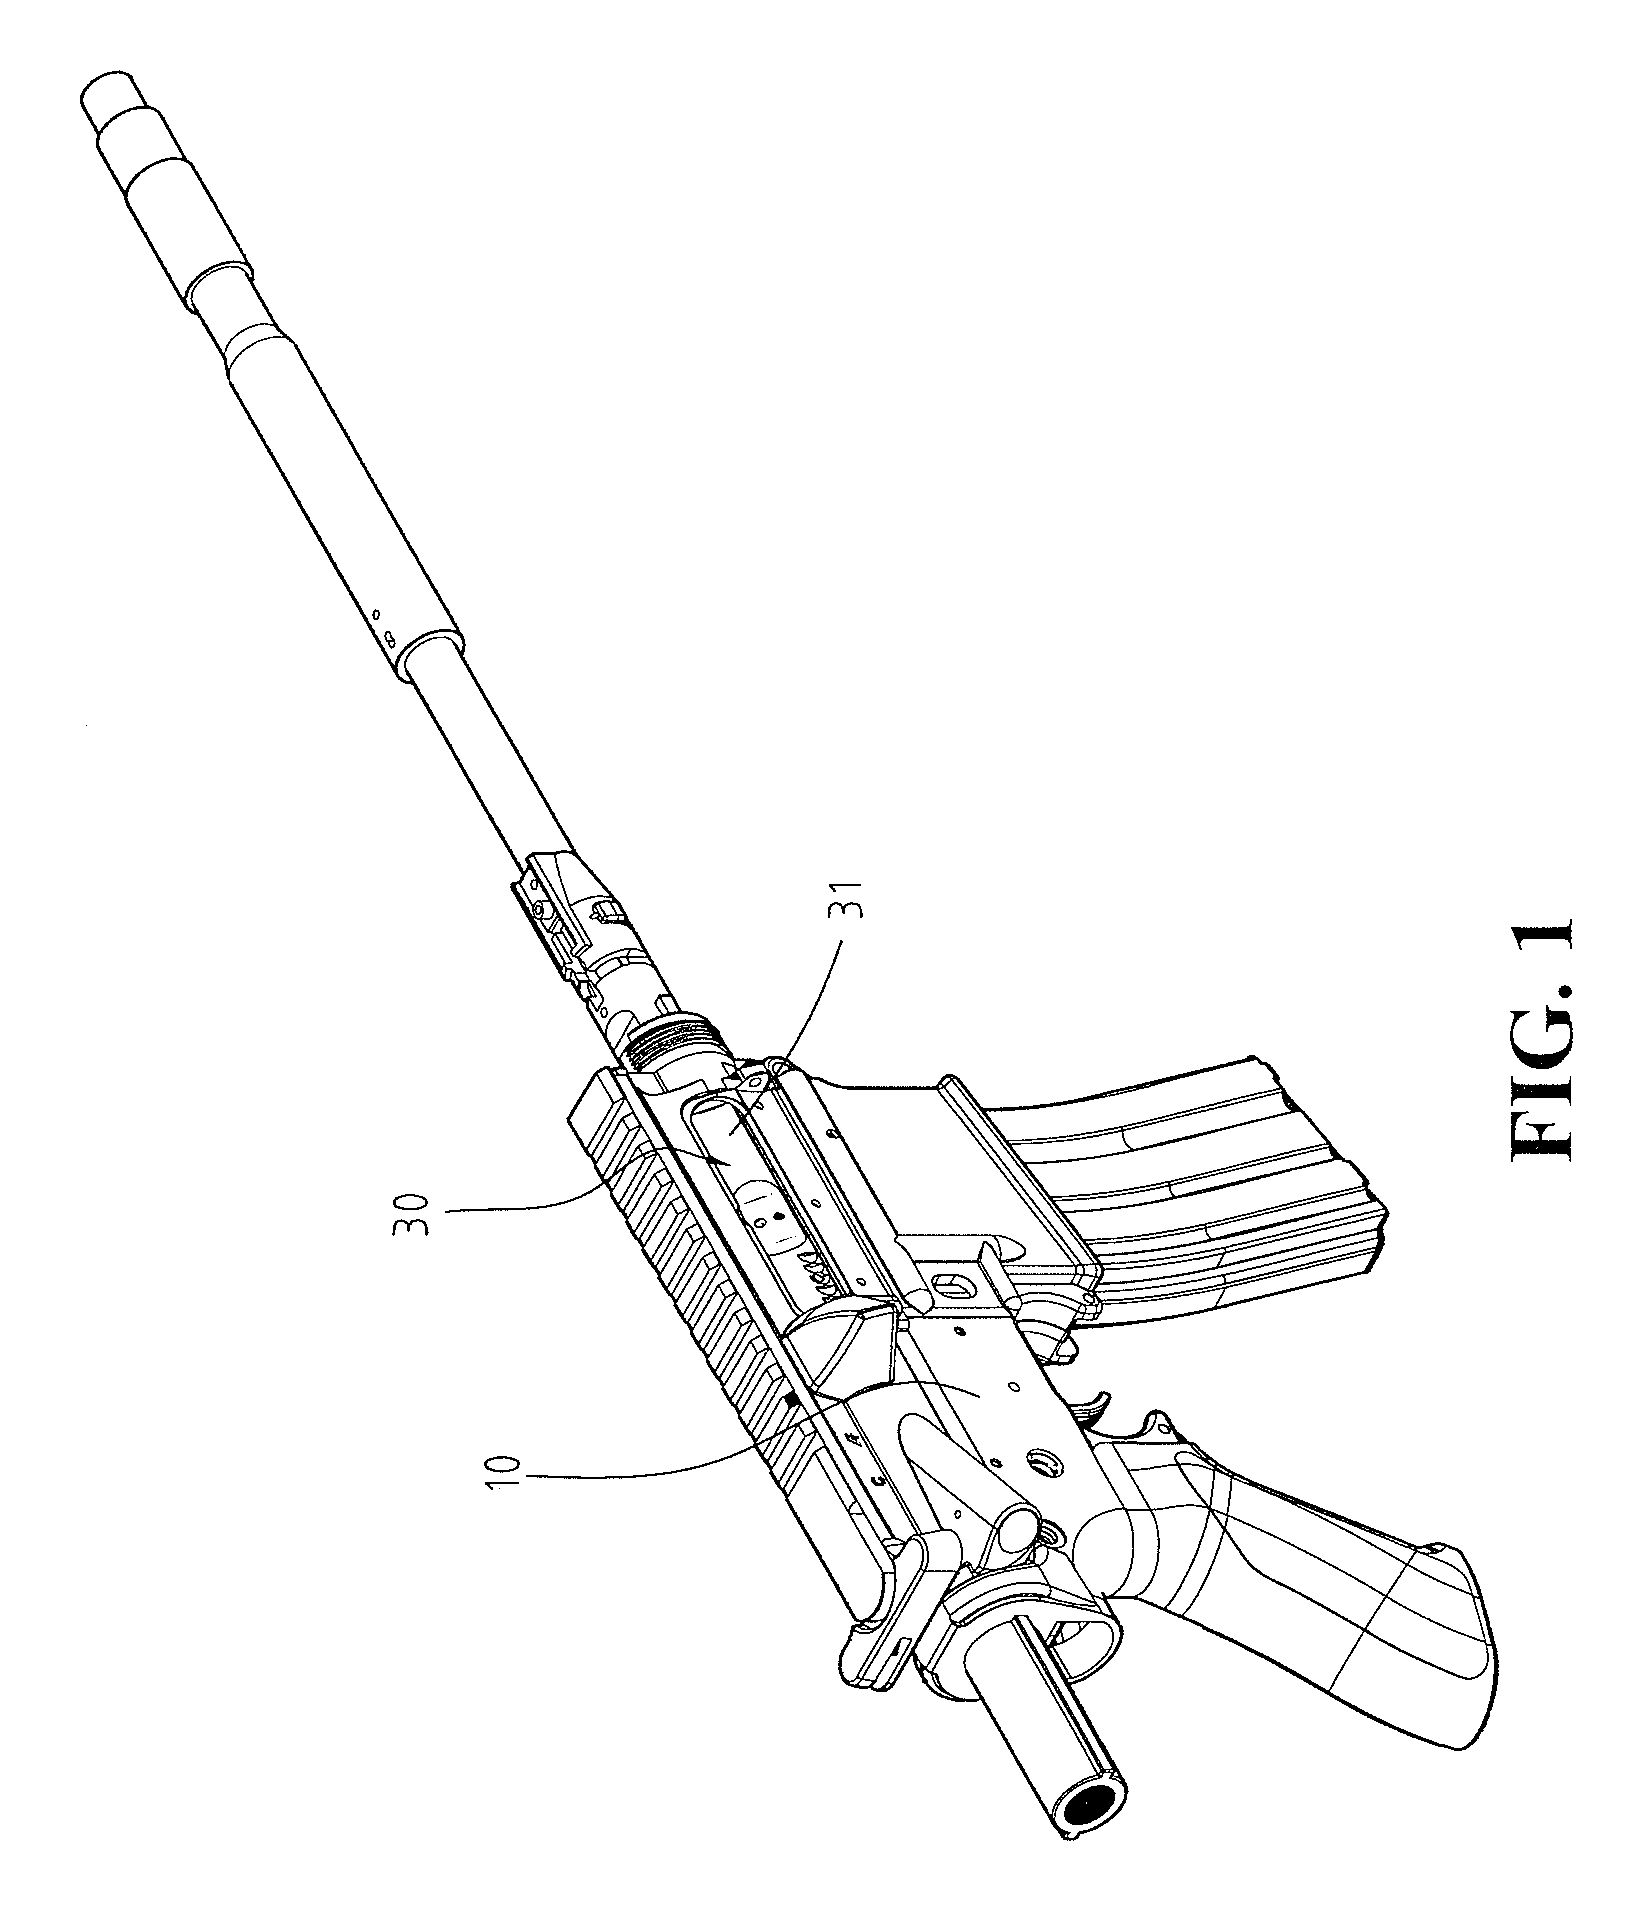 Toy gun mechanism with a sliding bolt assembly